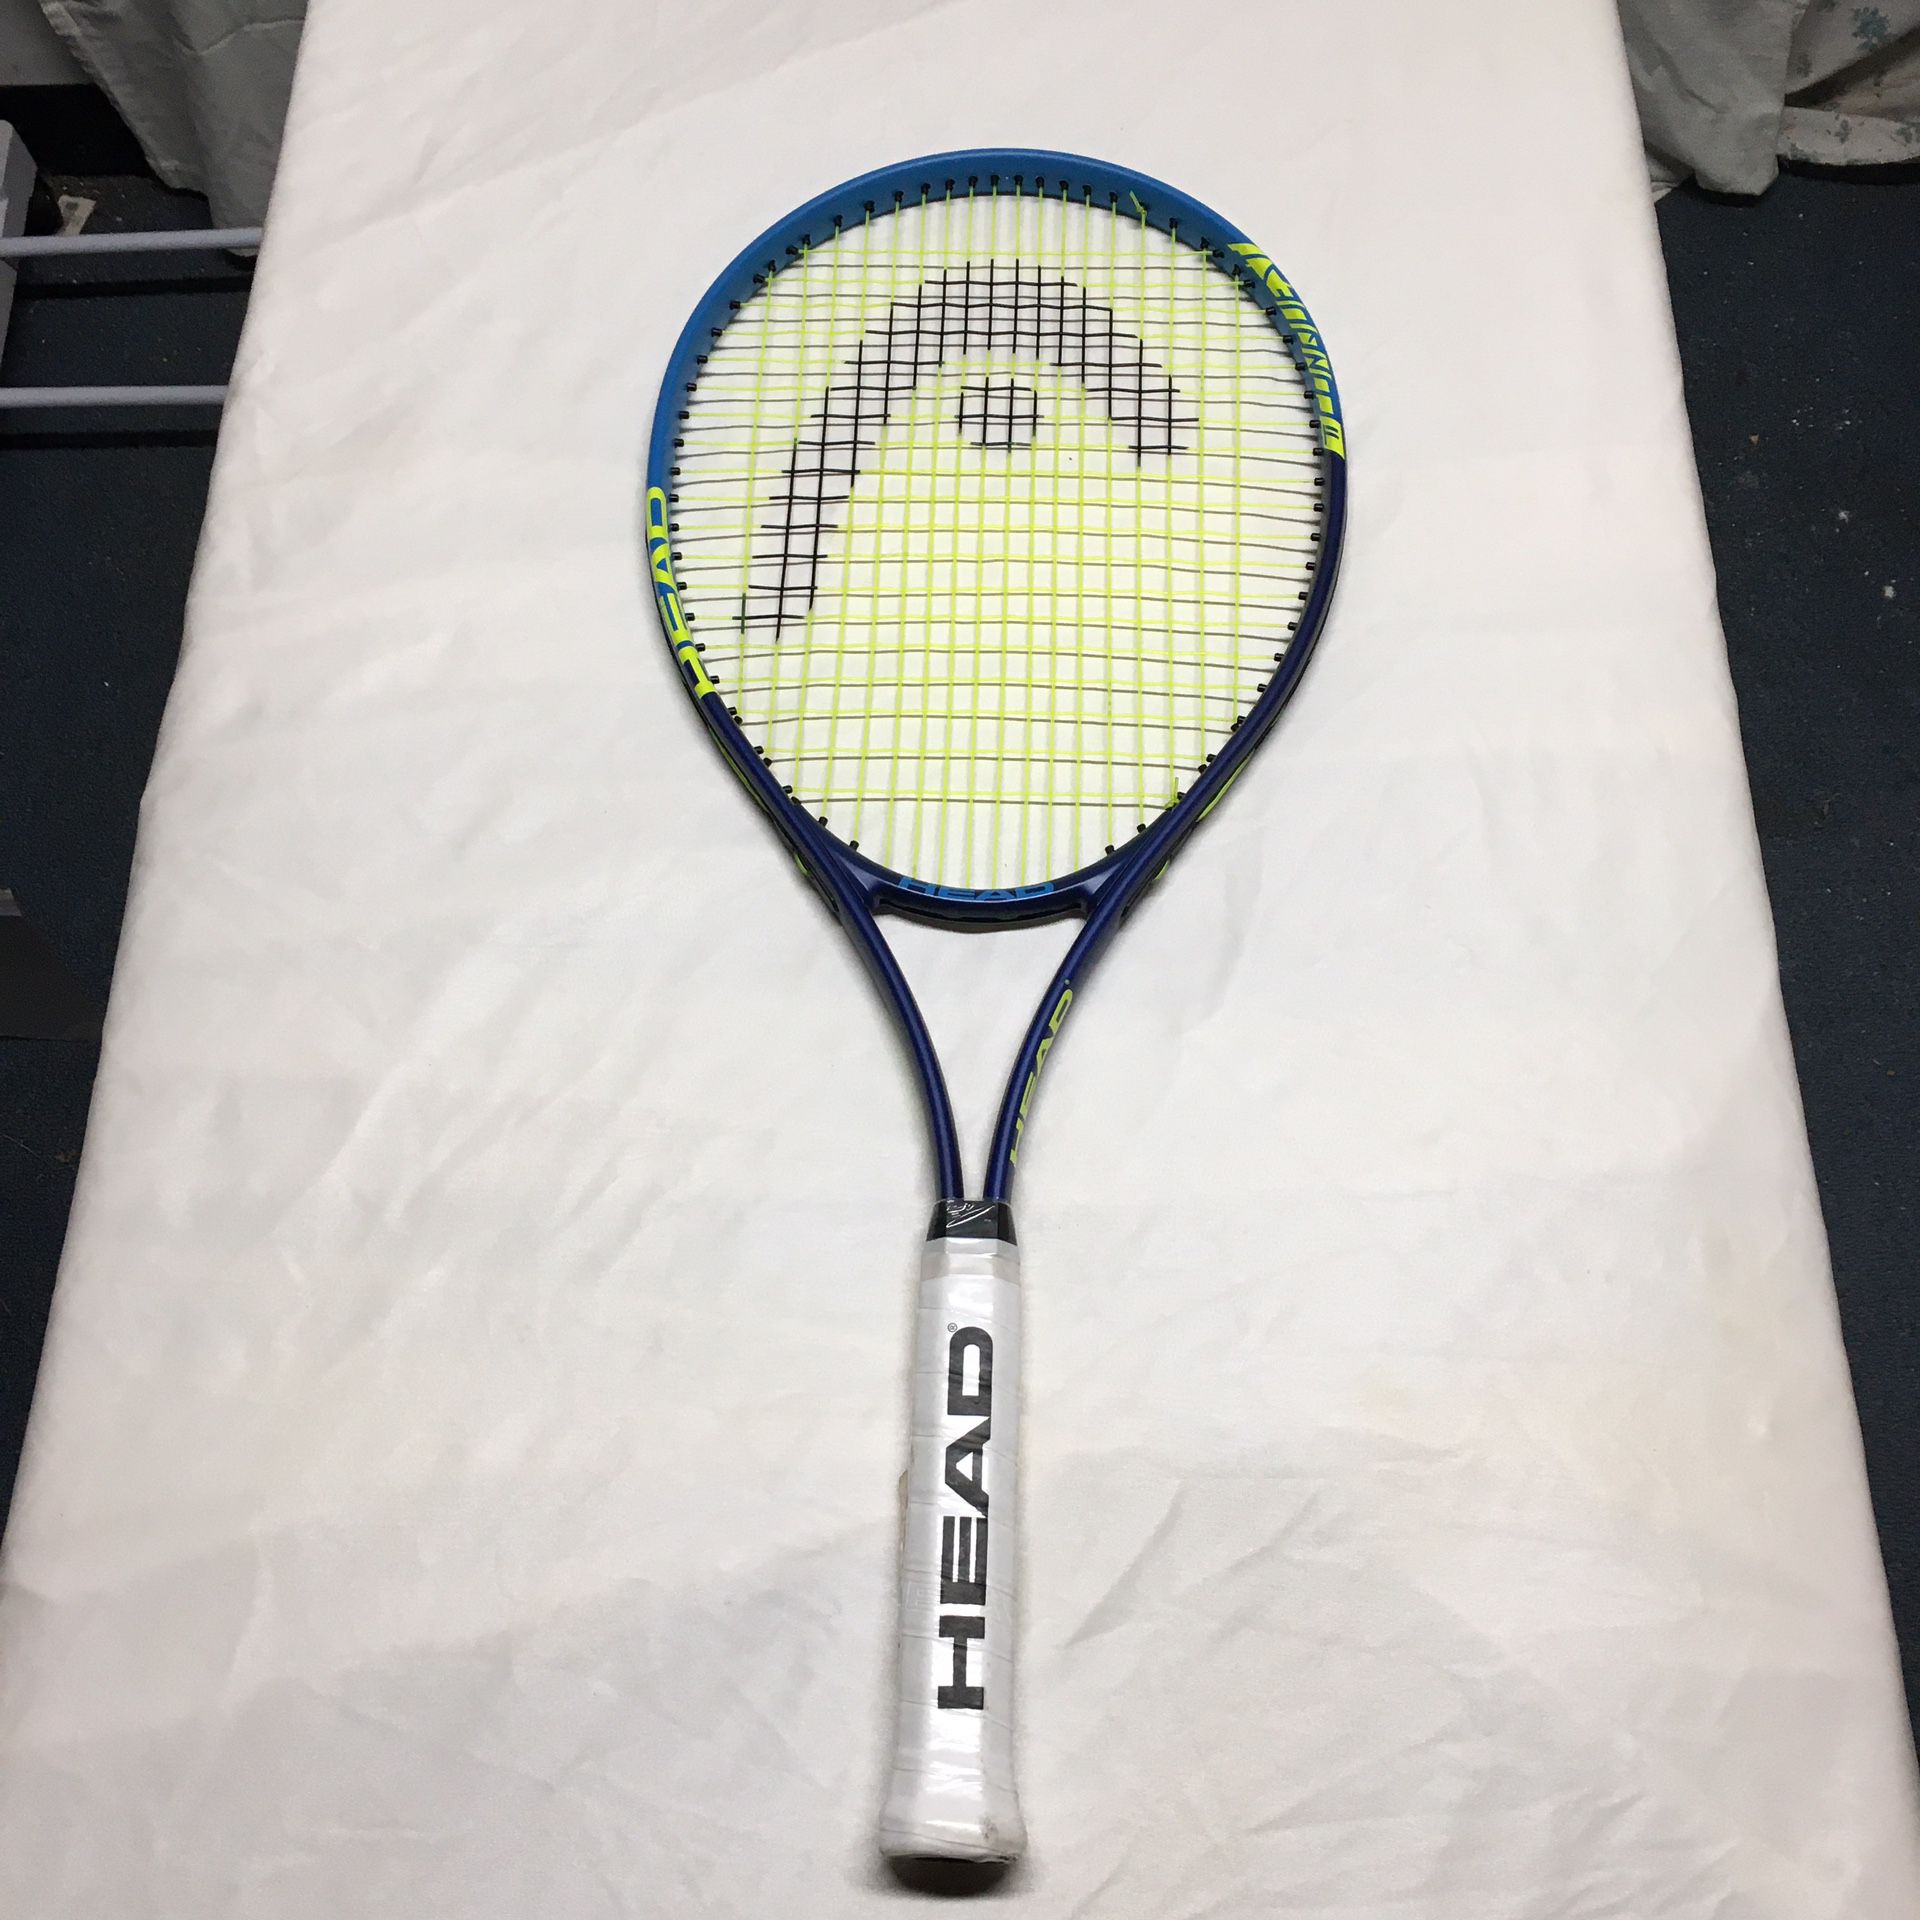 New head Tennis Racket